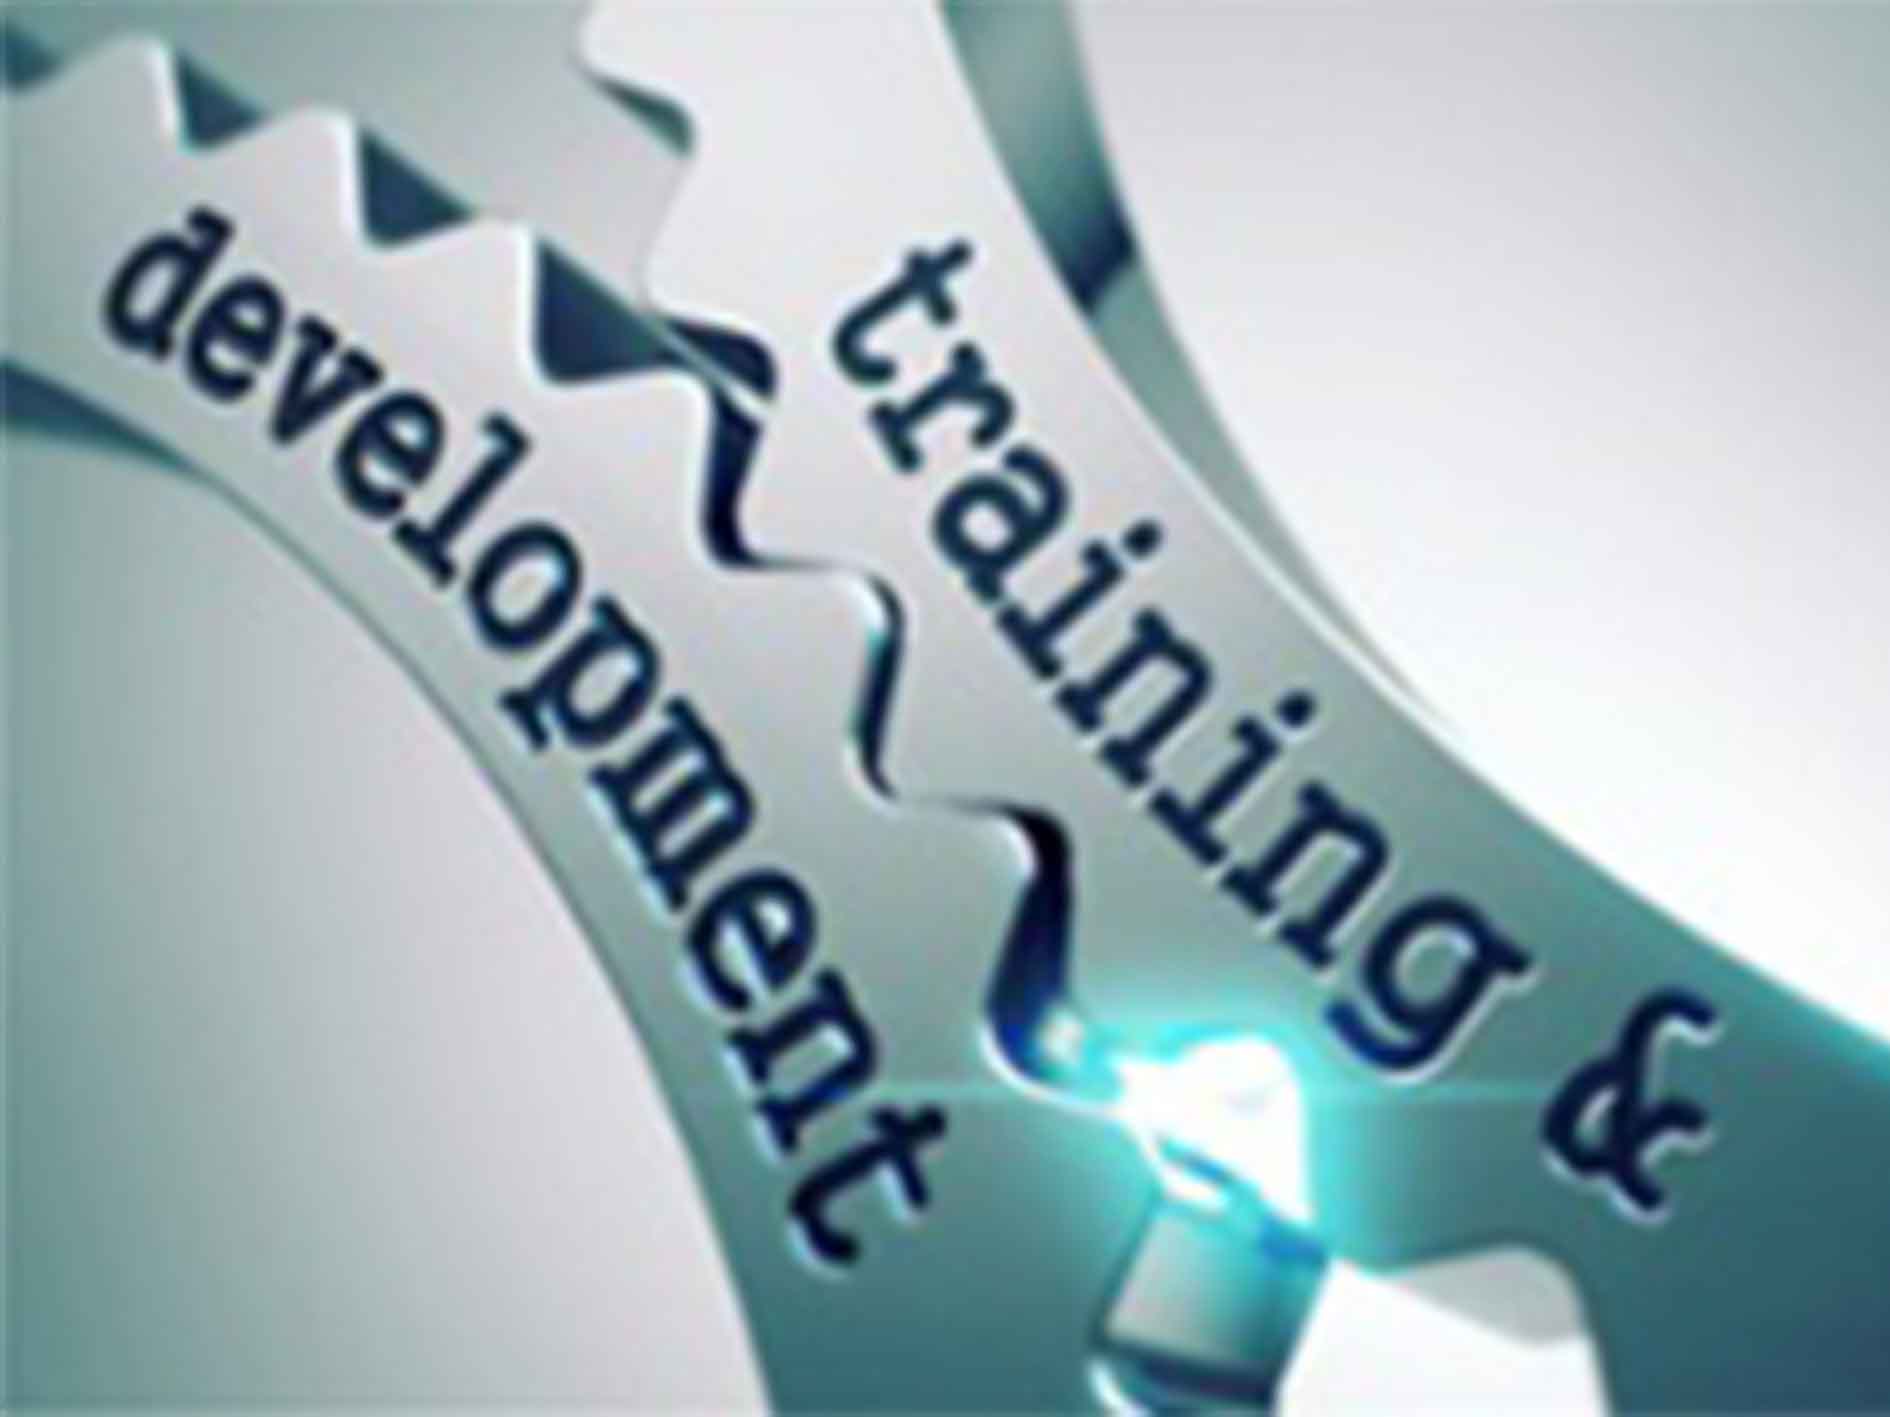 Training_course_für_sap_analysis_for_microsoft_office_lernziele